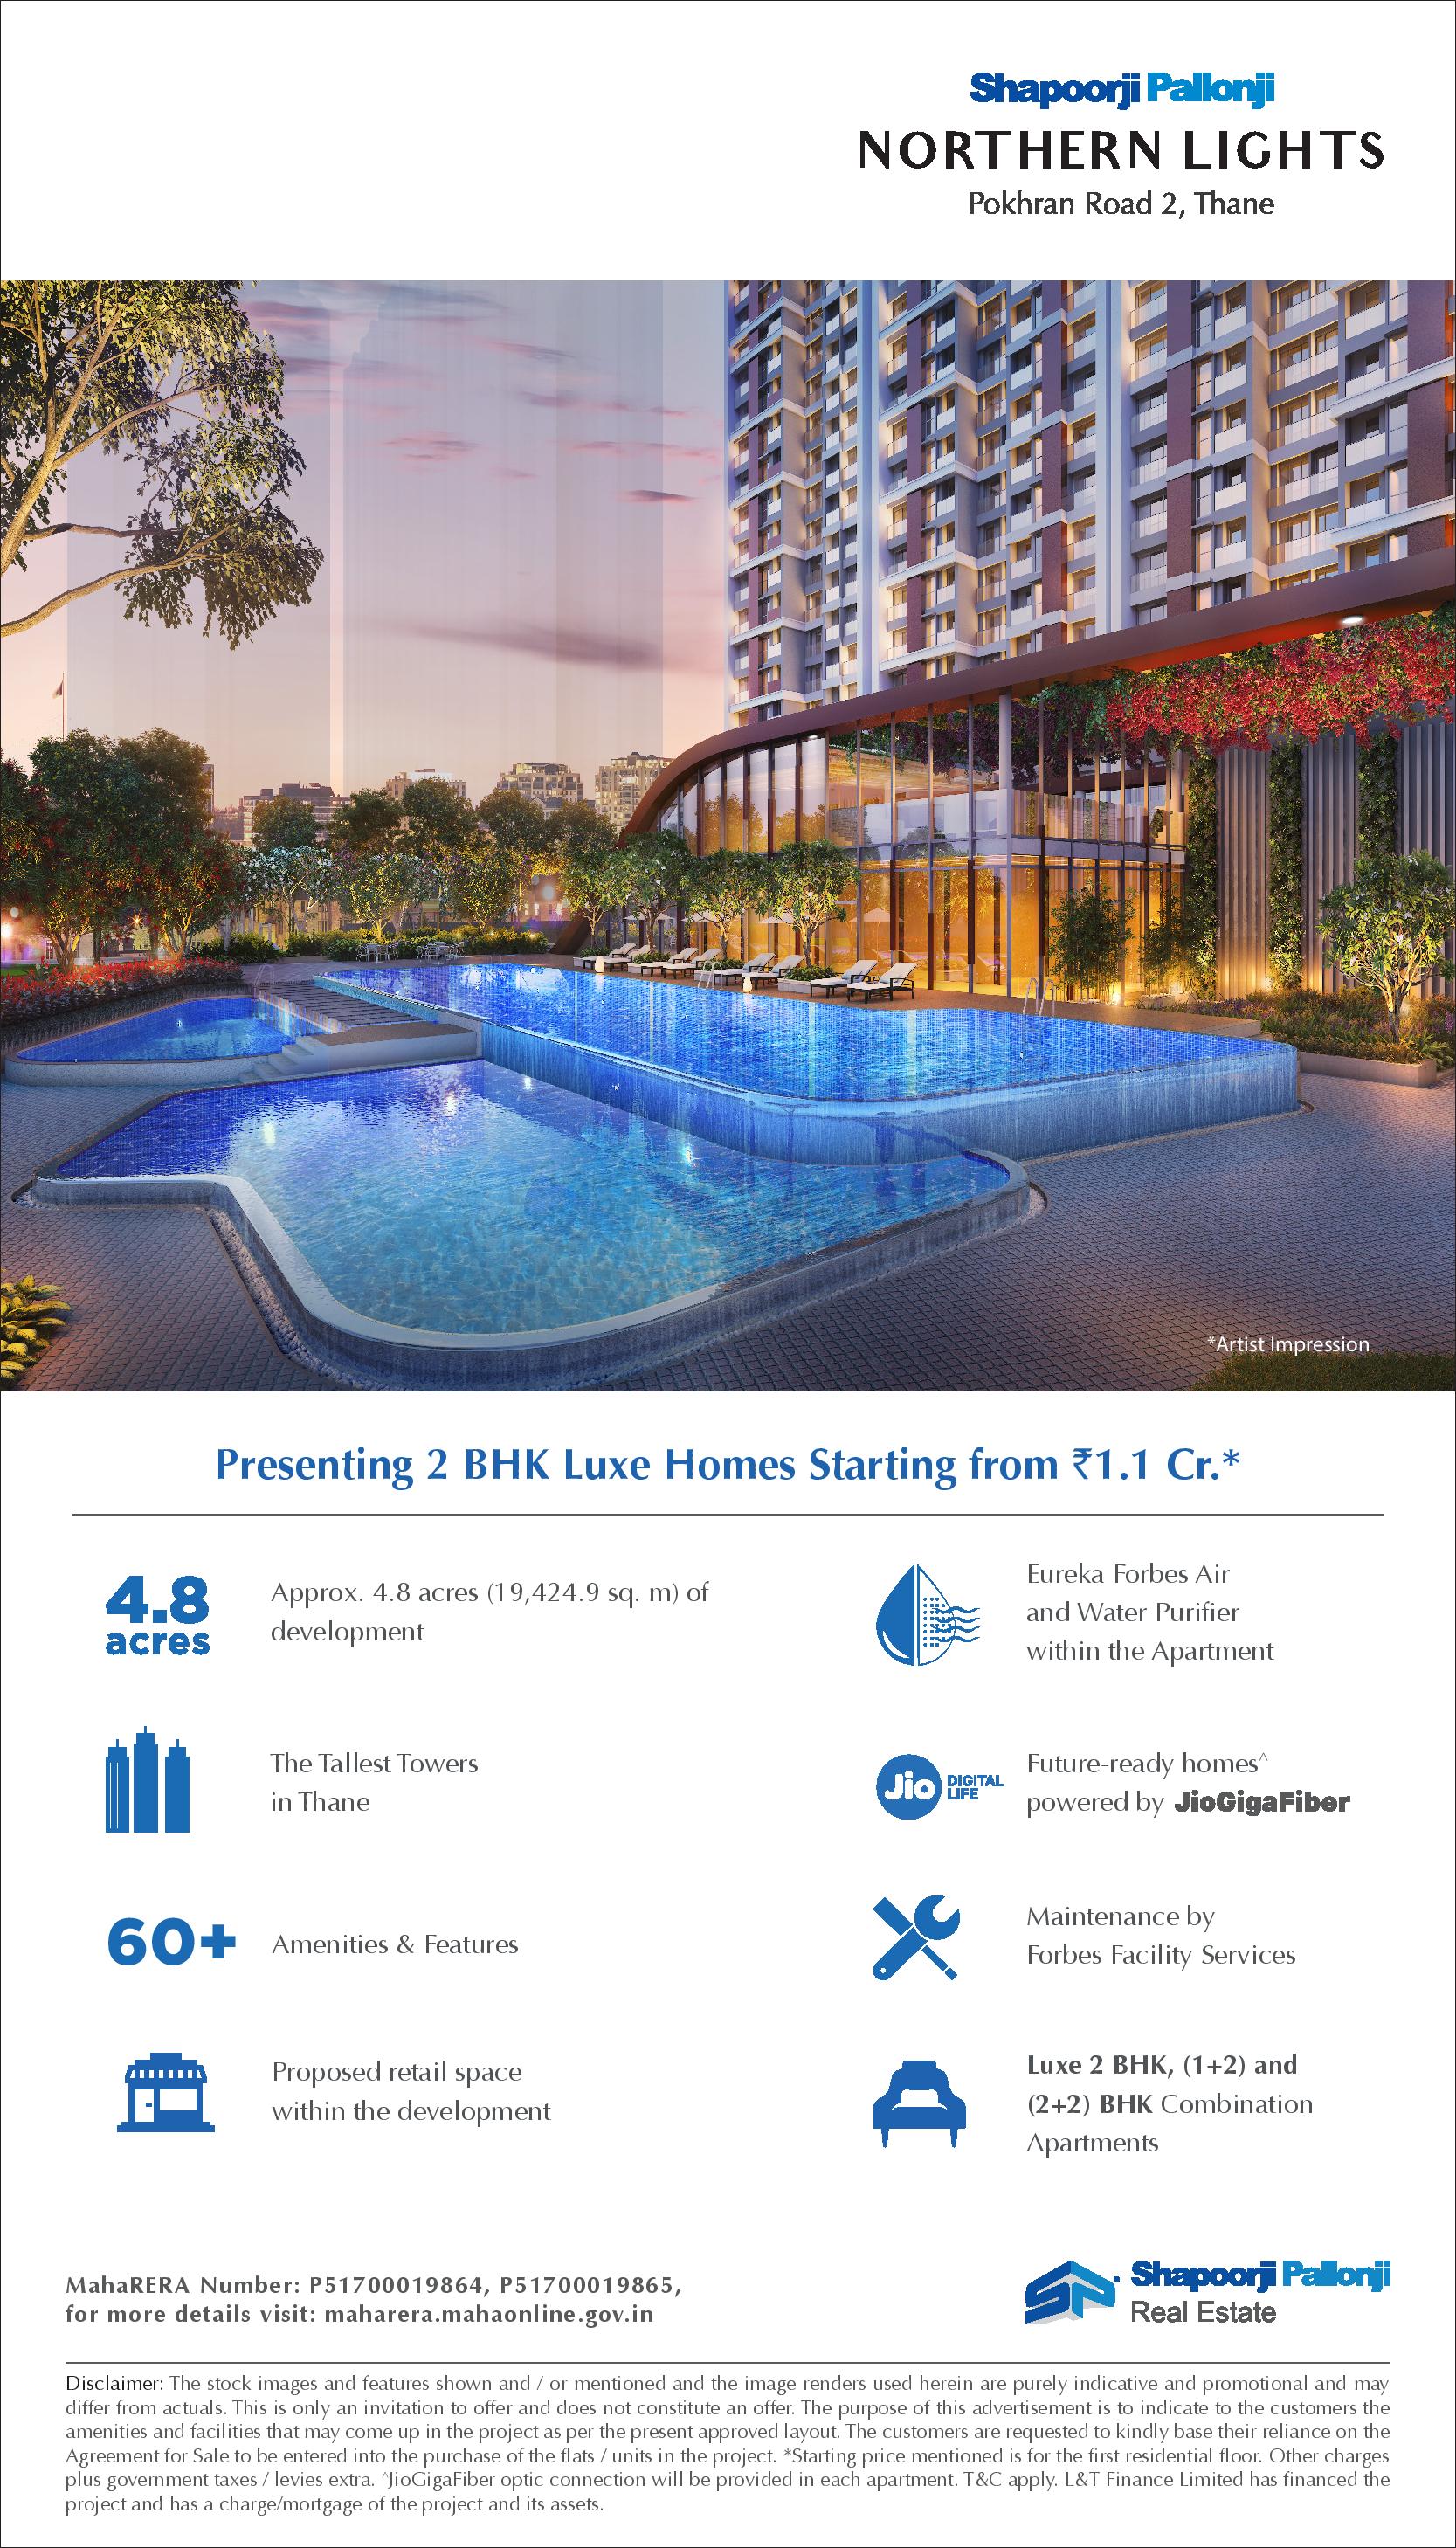 Presenting 2 bhk luxe homes at Rs. 1.1 Crore at Shapoorji Pallonji Northern Lights in Thane, Mumbai Update